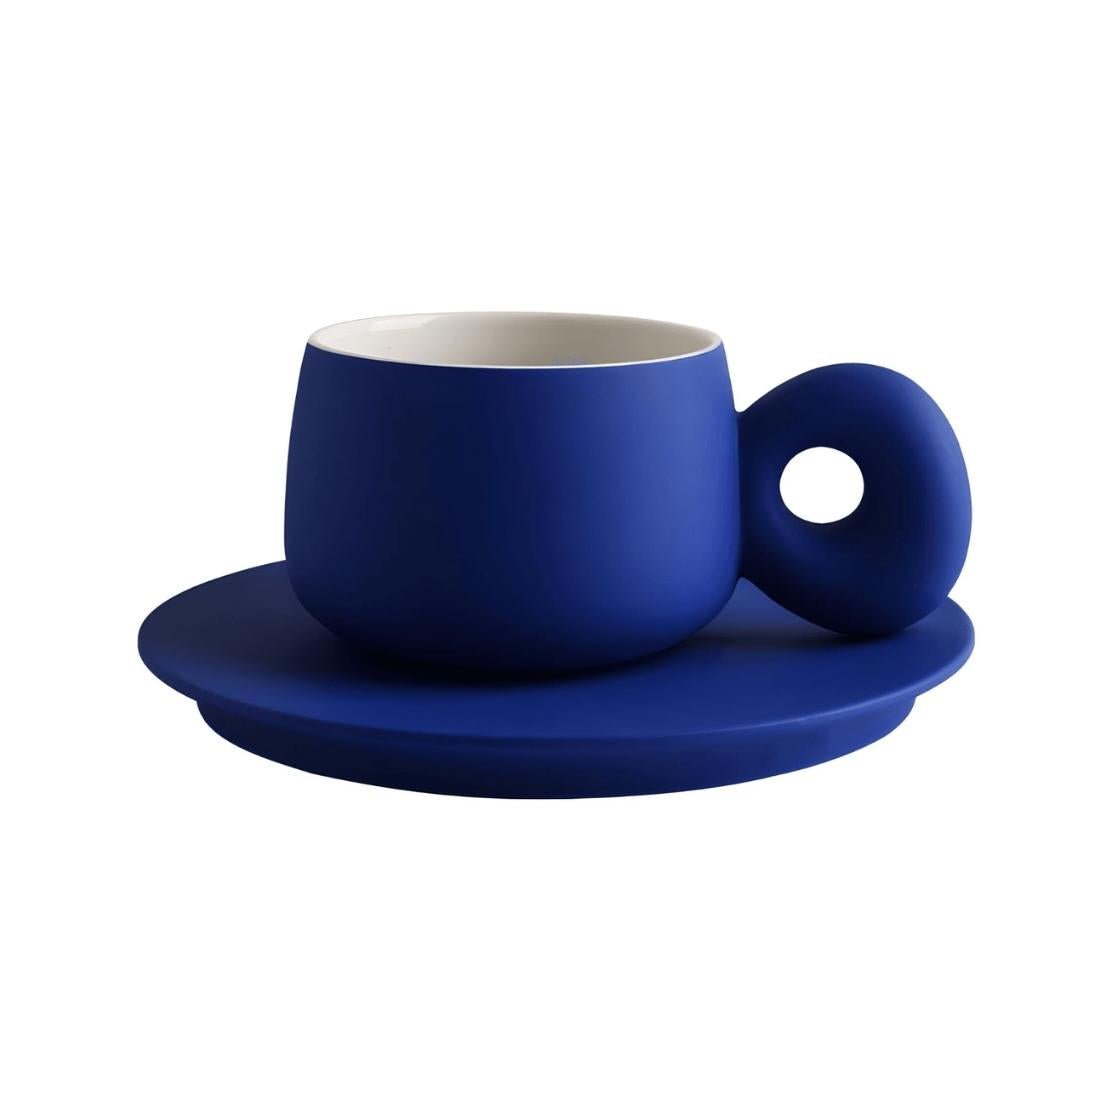 Groovy blue ceramic mug with saucer